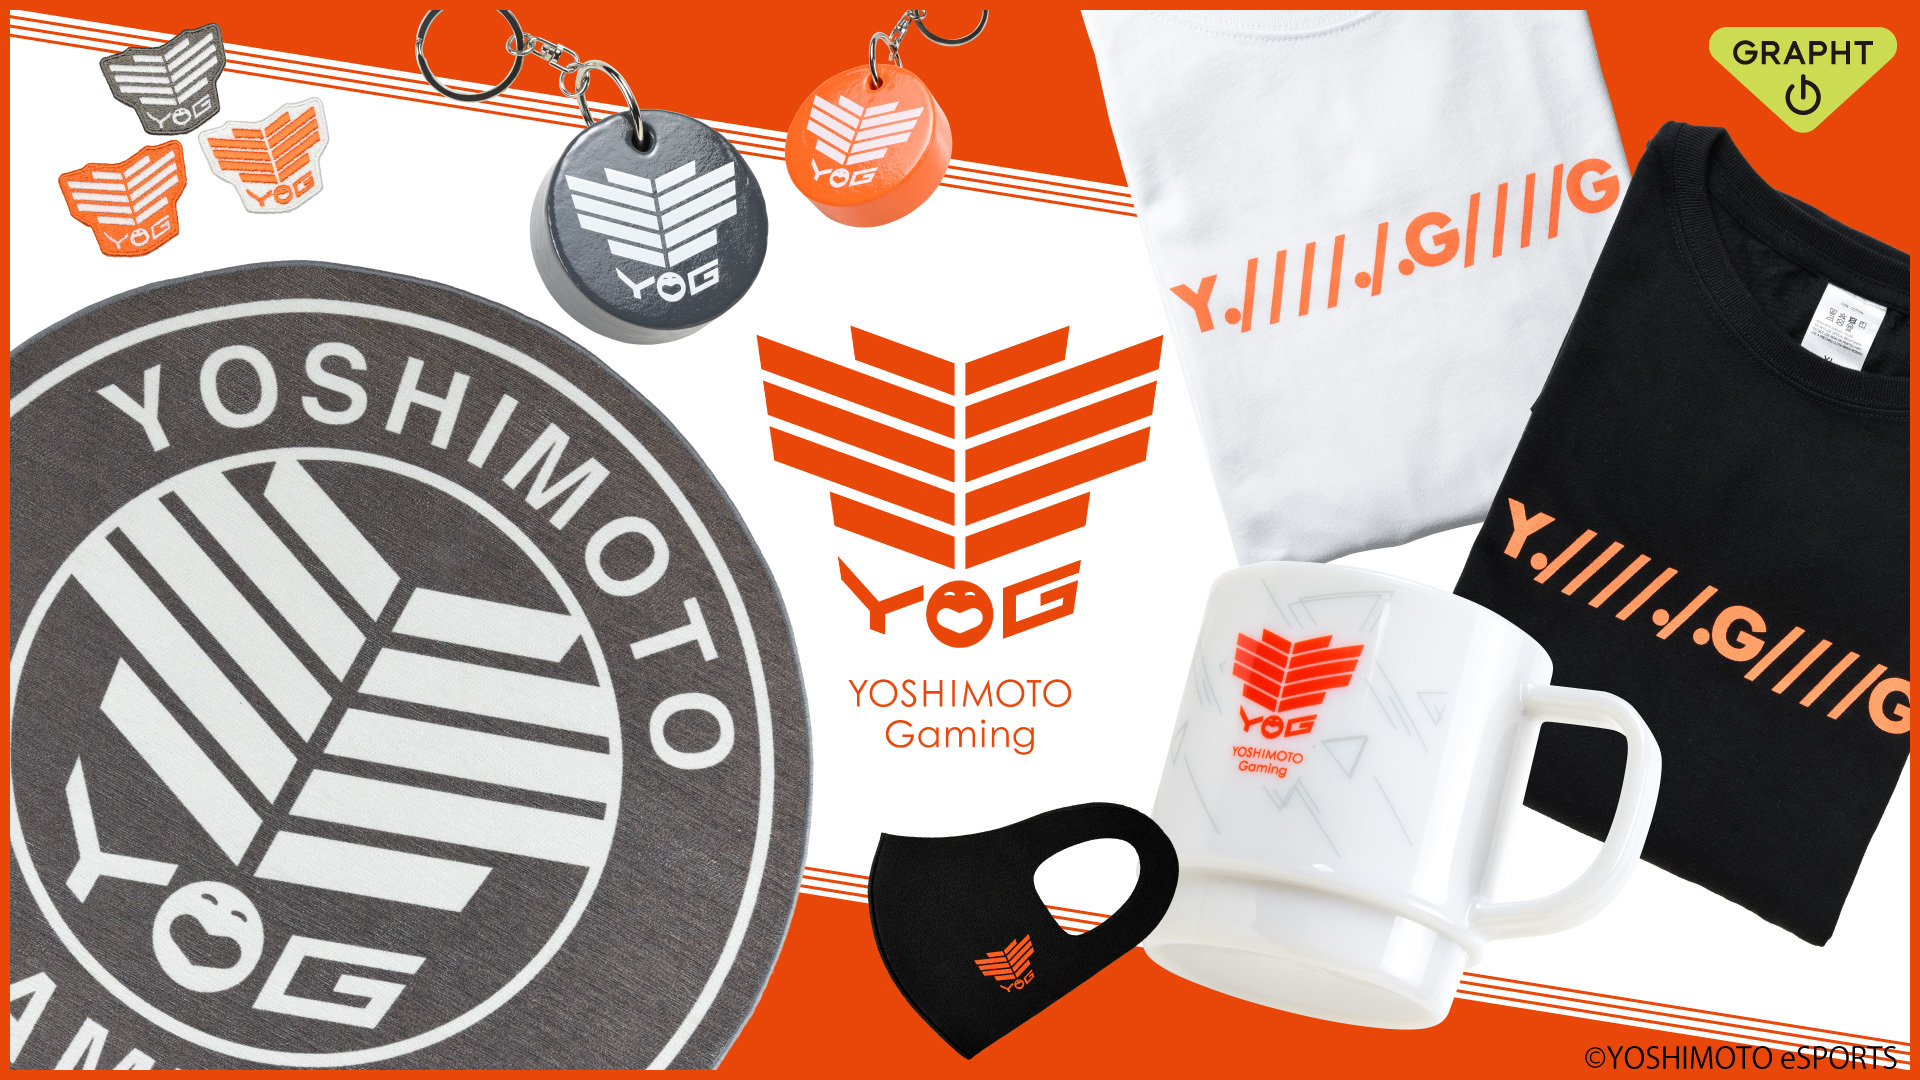 Team GRAPHTが「YOSHIMOTO Gaming」との
コラボコレクションを9月30日(金)に発売！